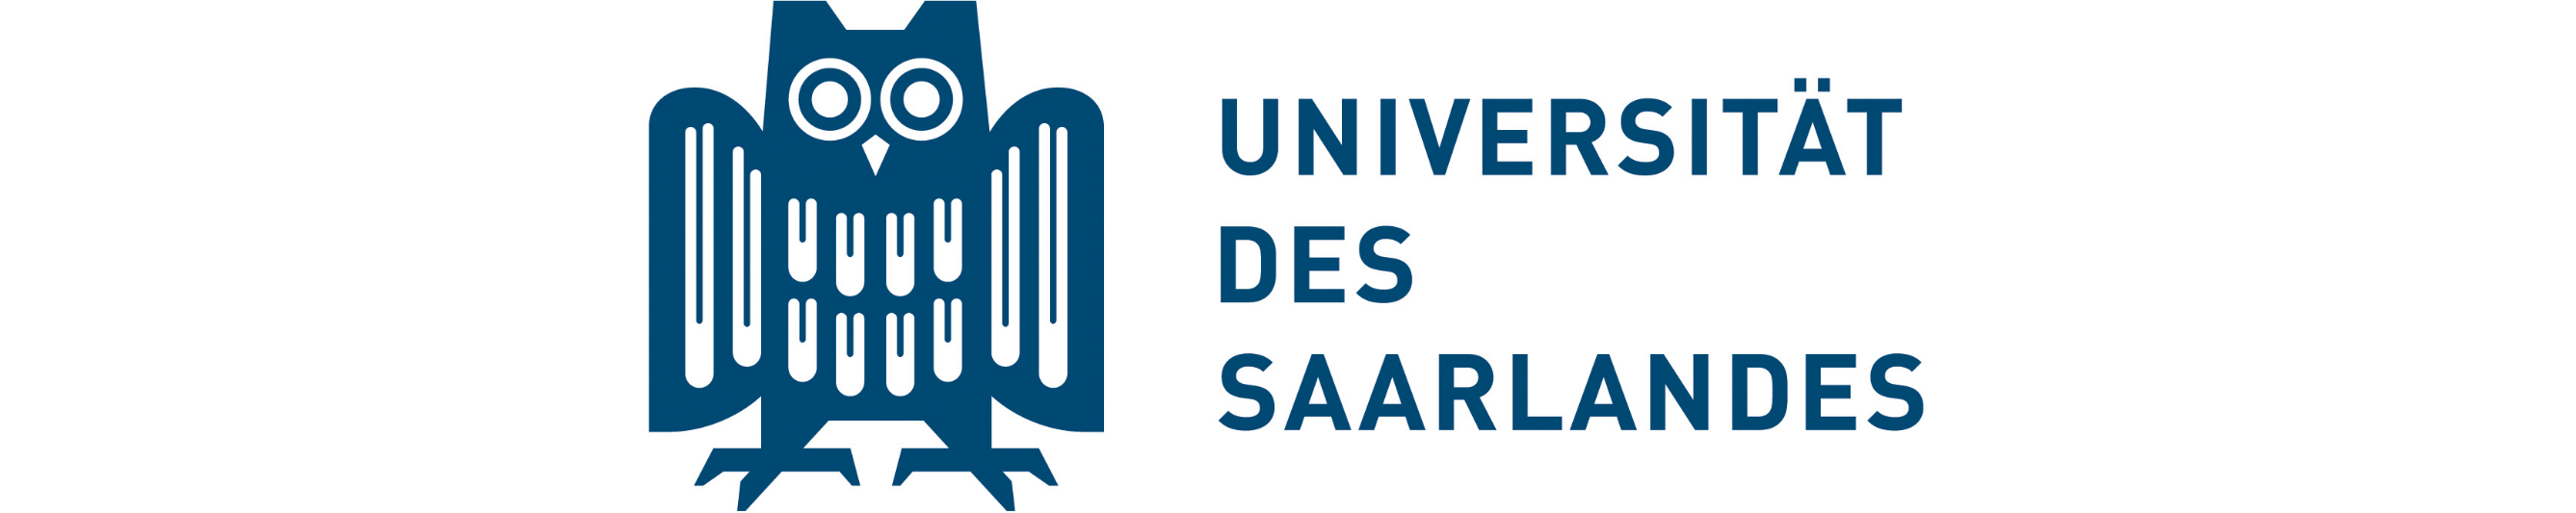 Saarland university